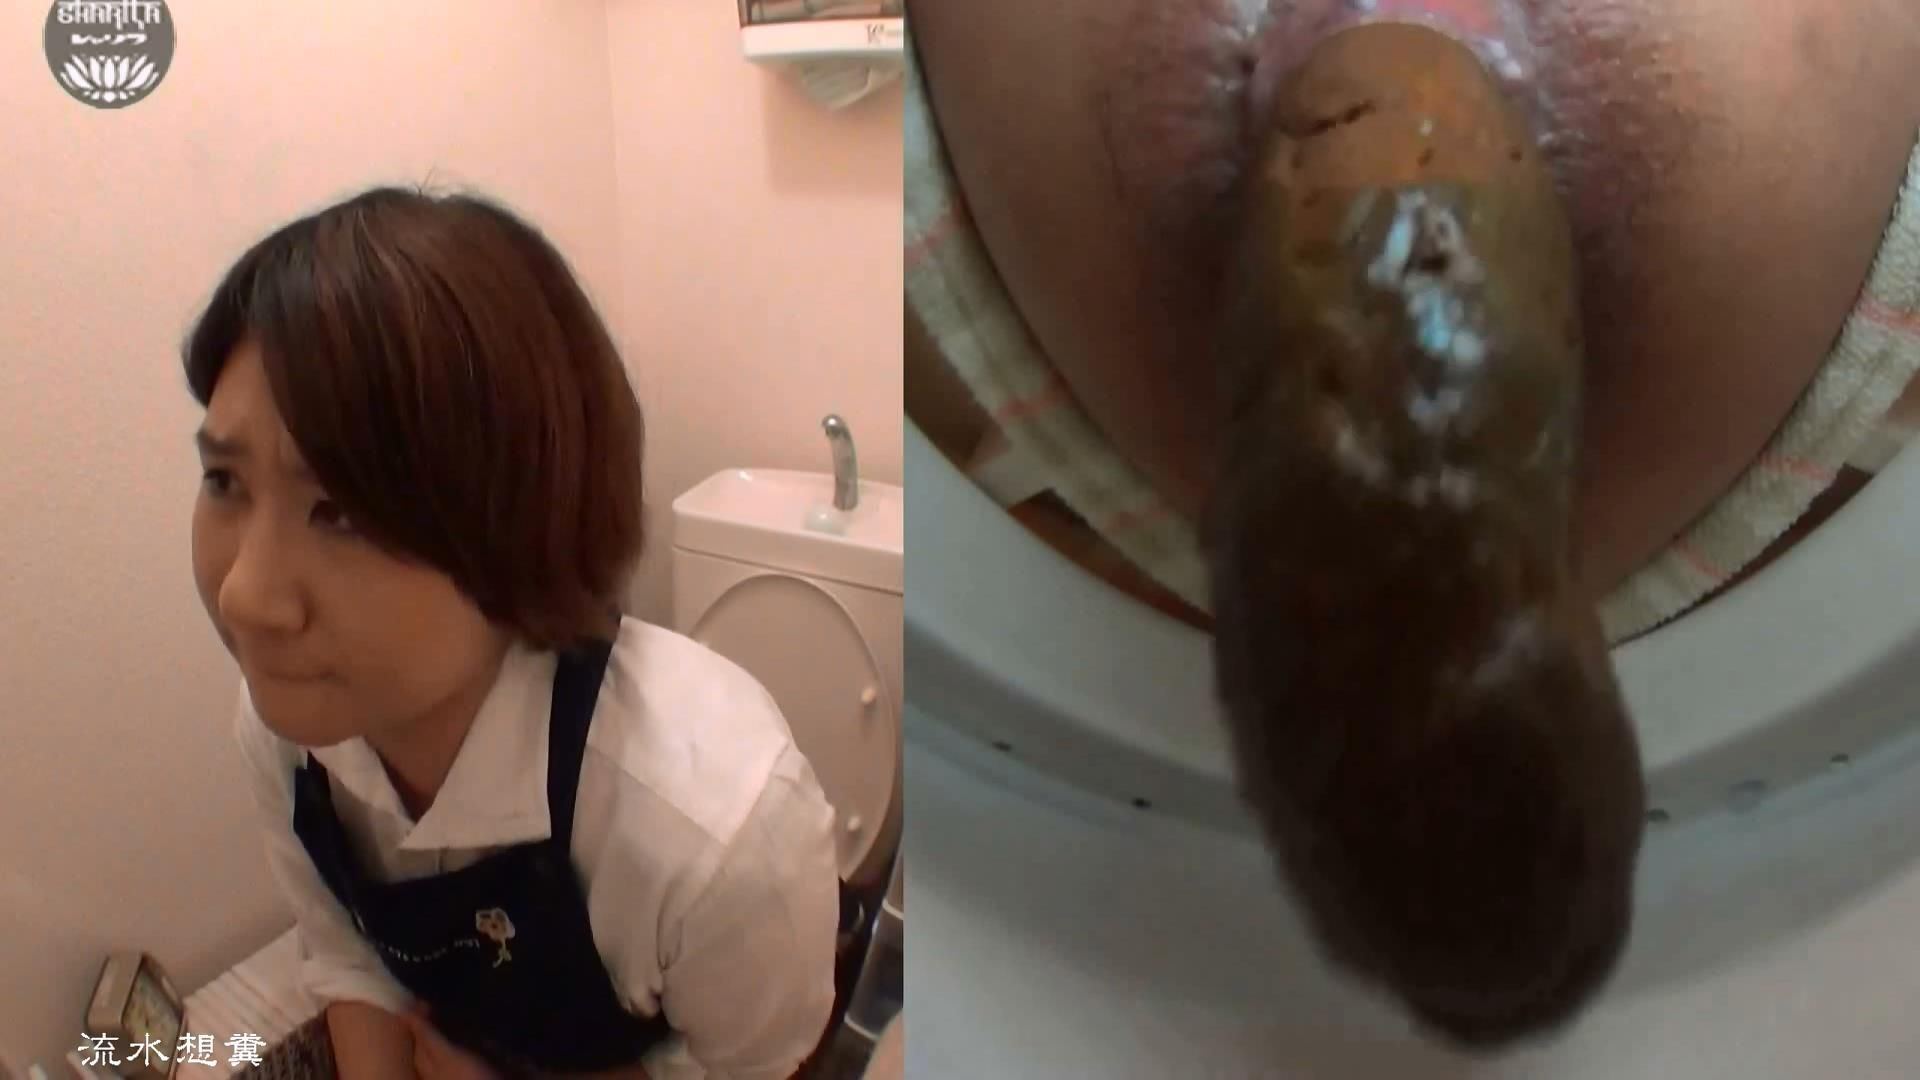 Asian toilet voyeur videos pooping shitting picture